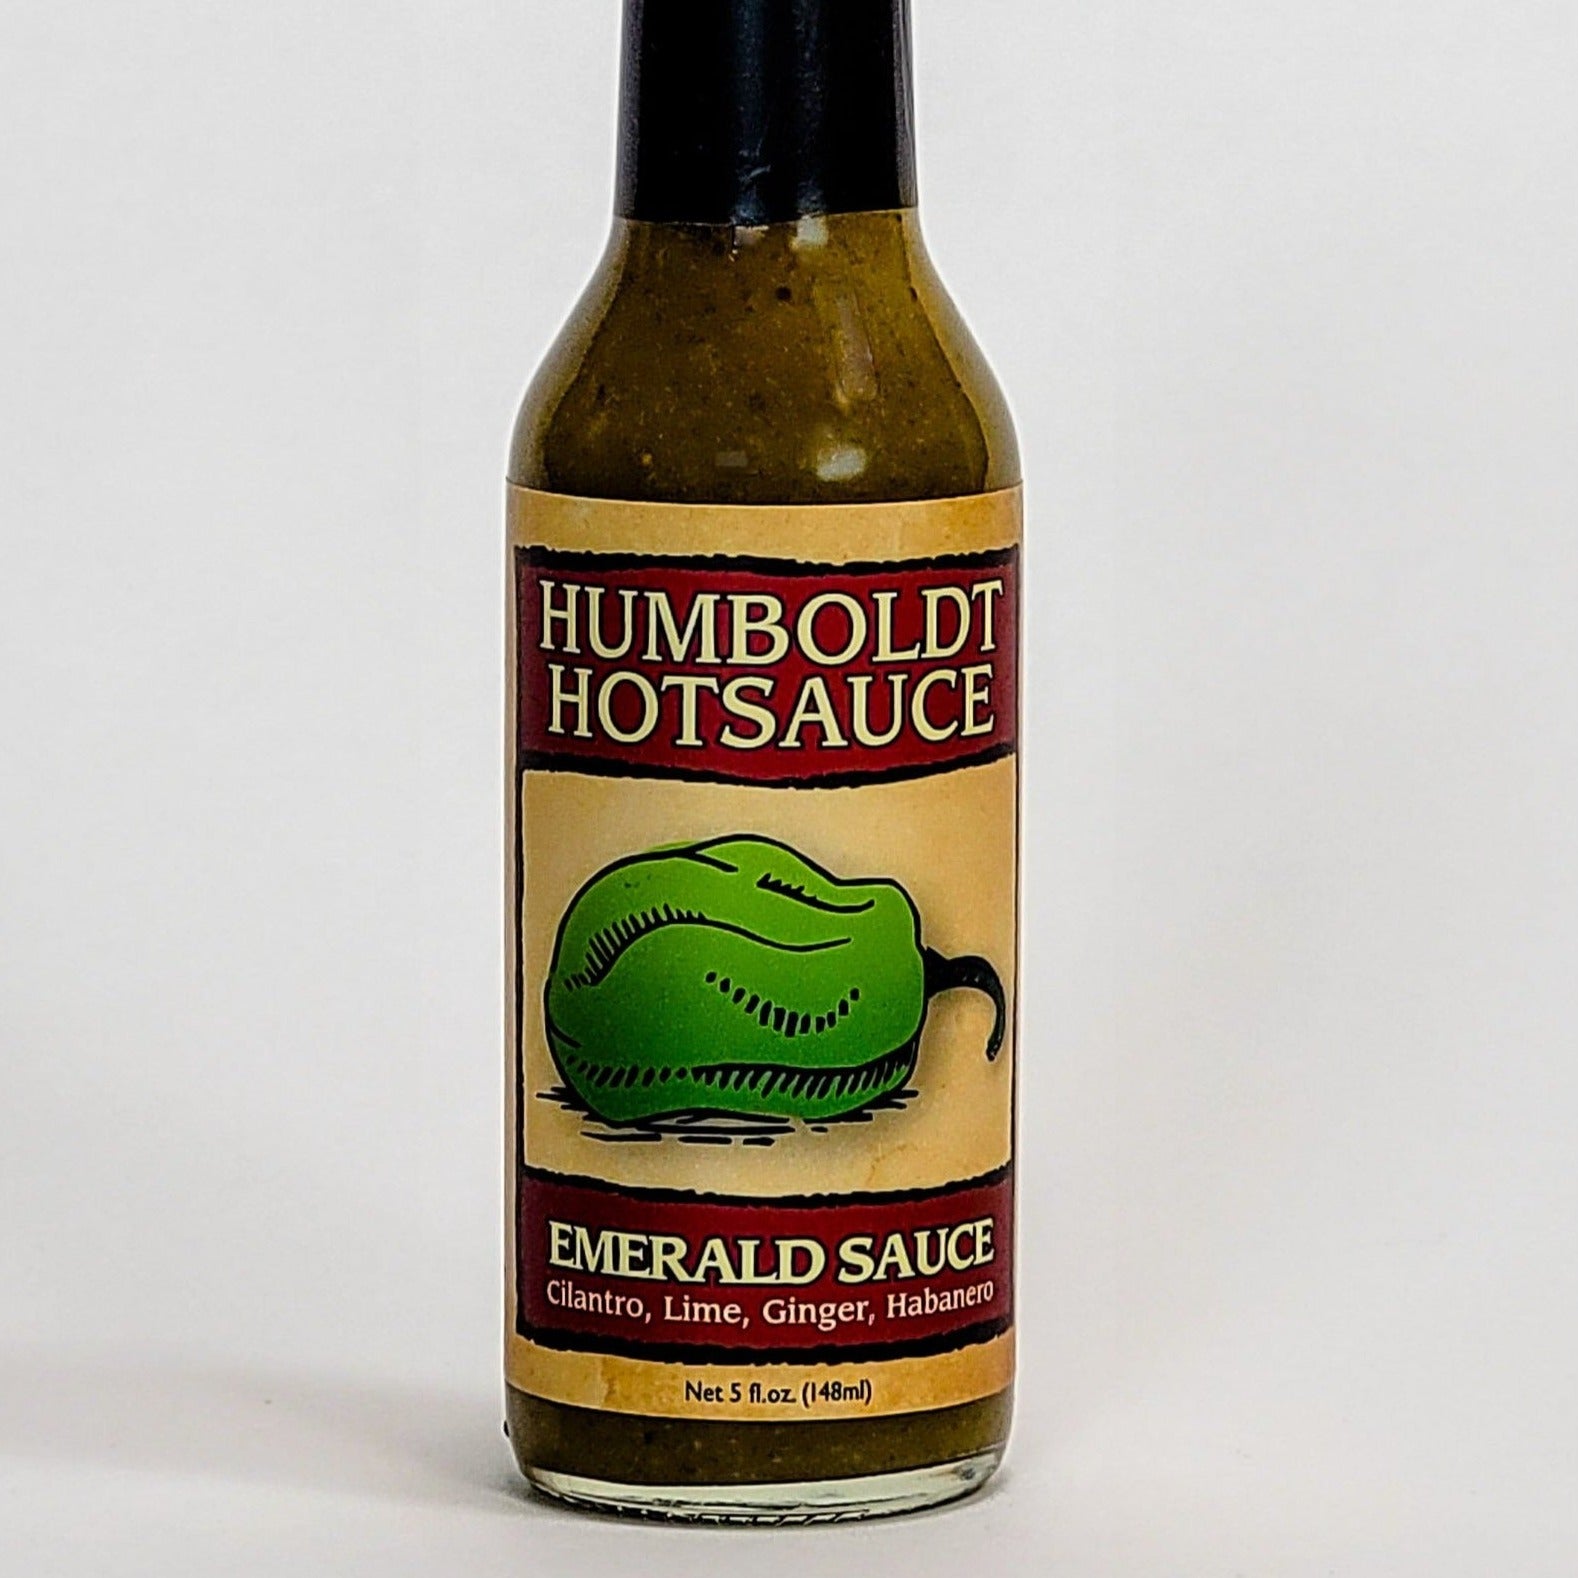 humboldt hot sauce emerald sauce label